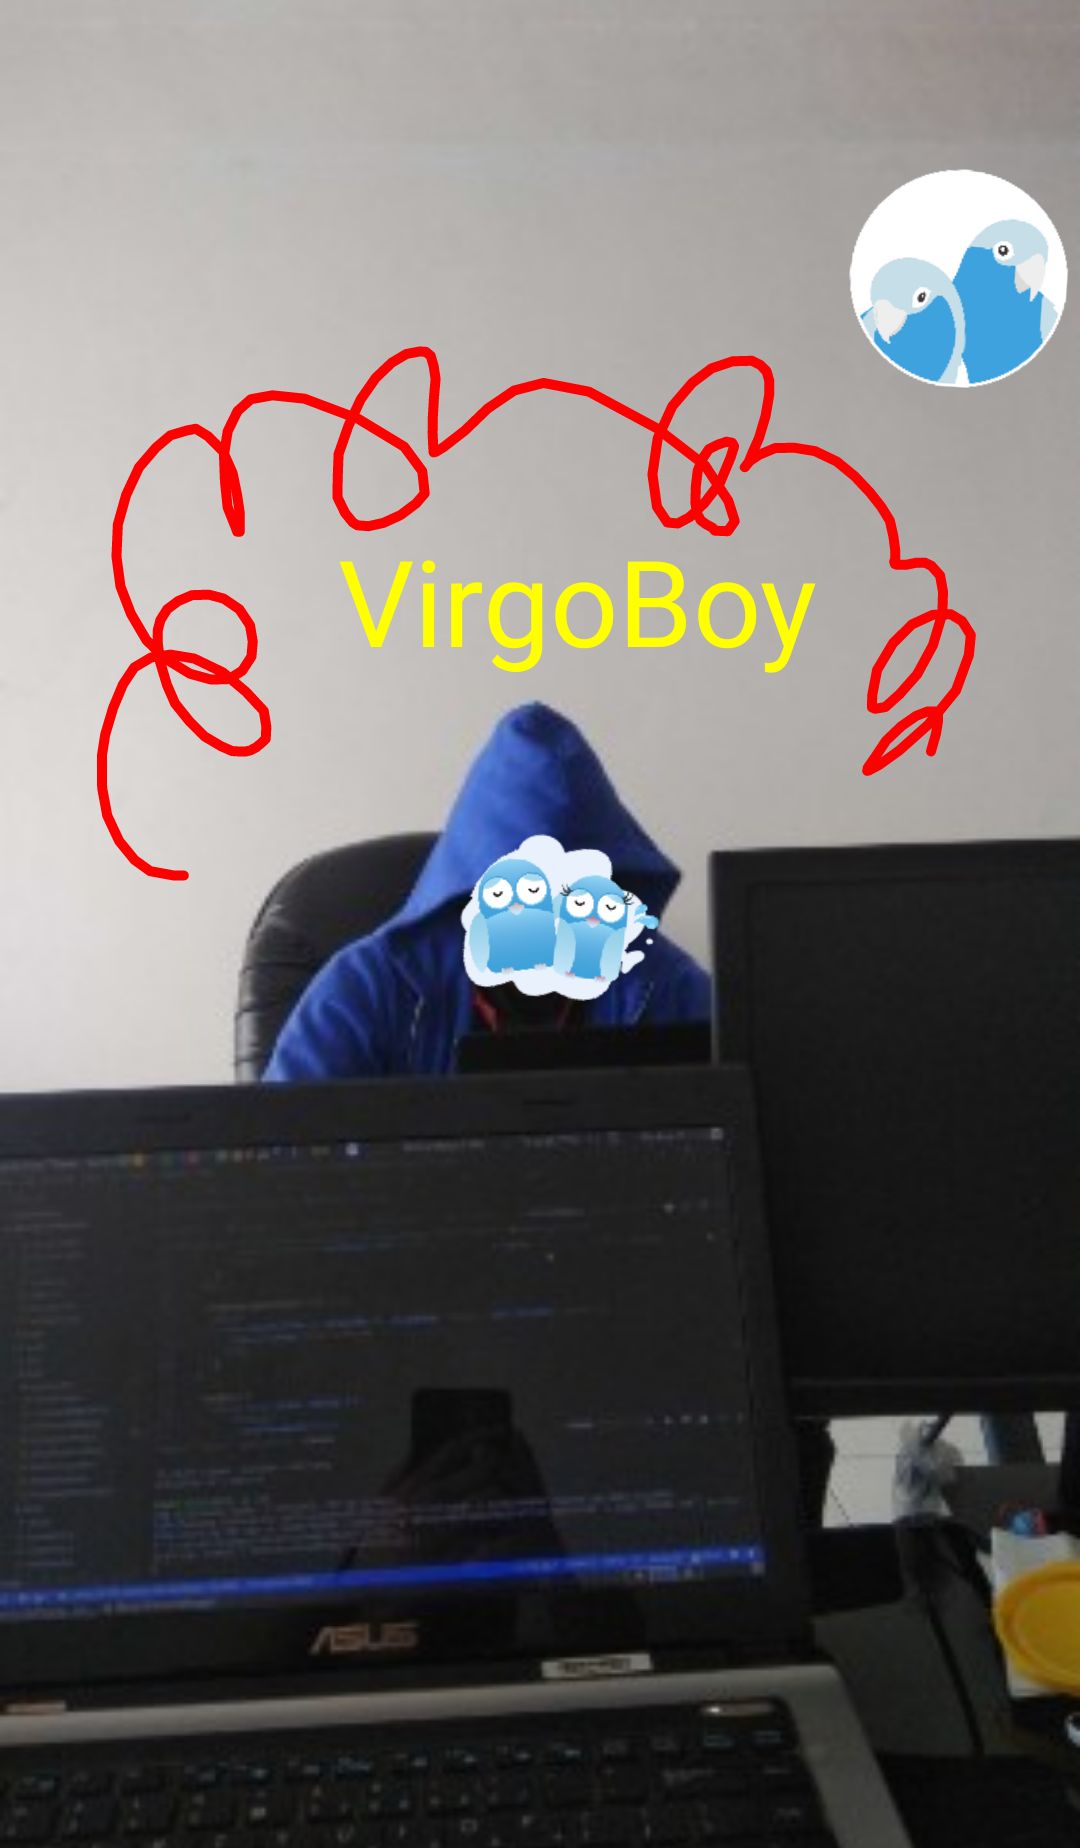 Virgo Boy acc fb